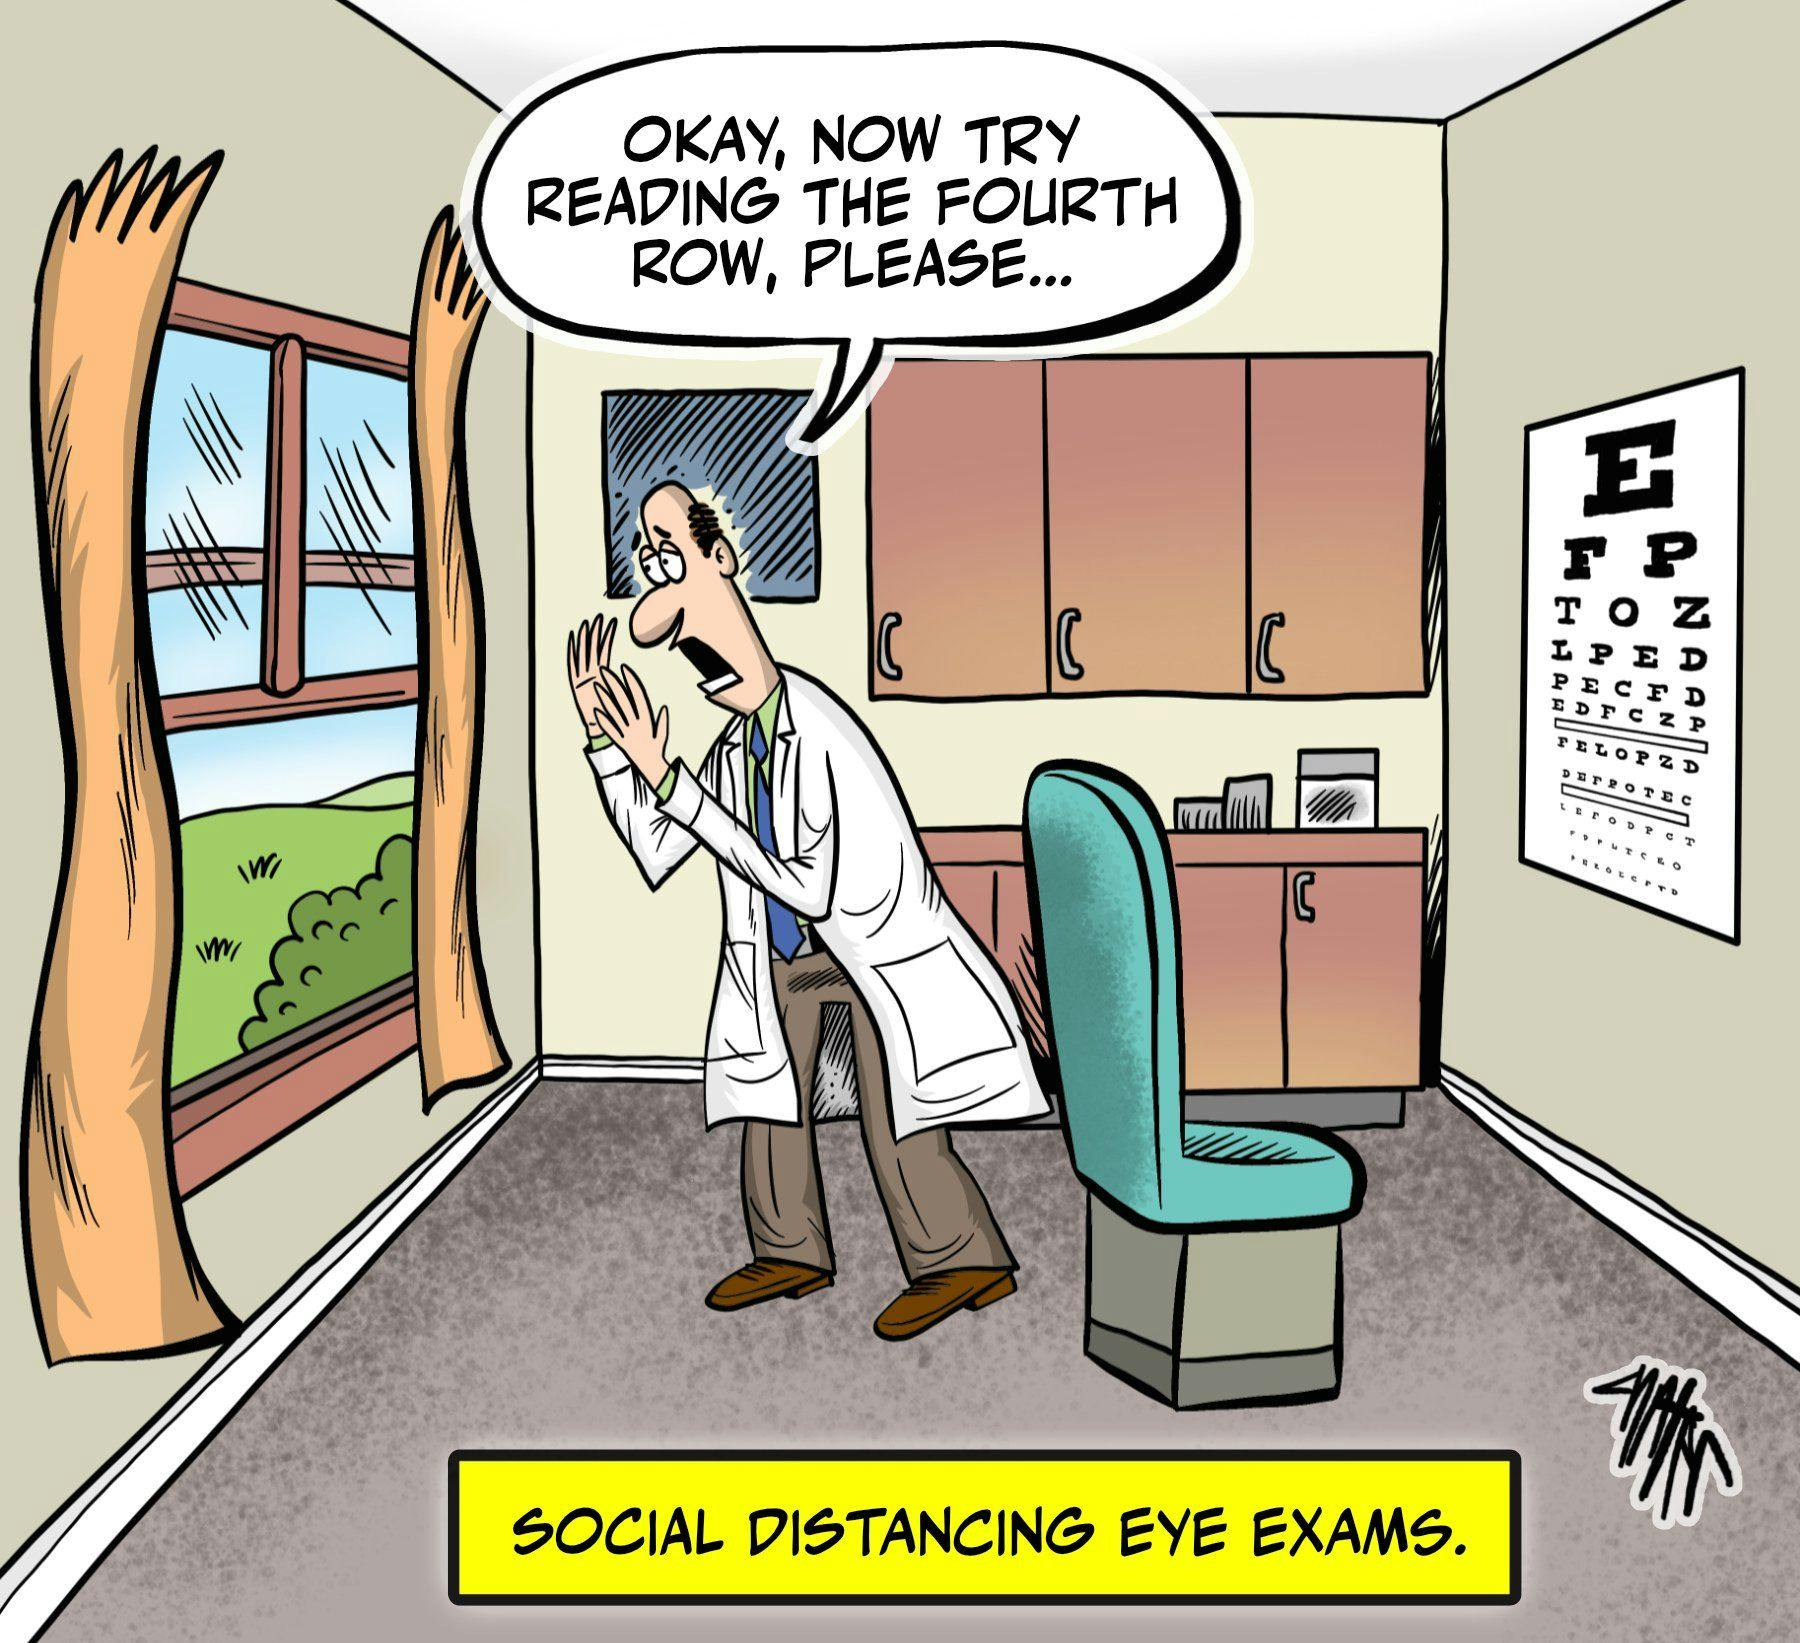 Social distancing eye exams